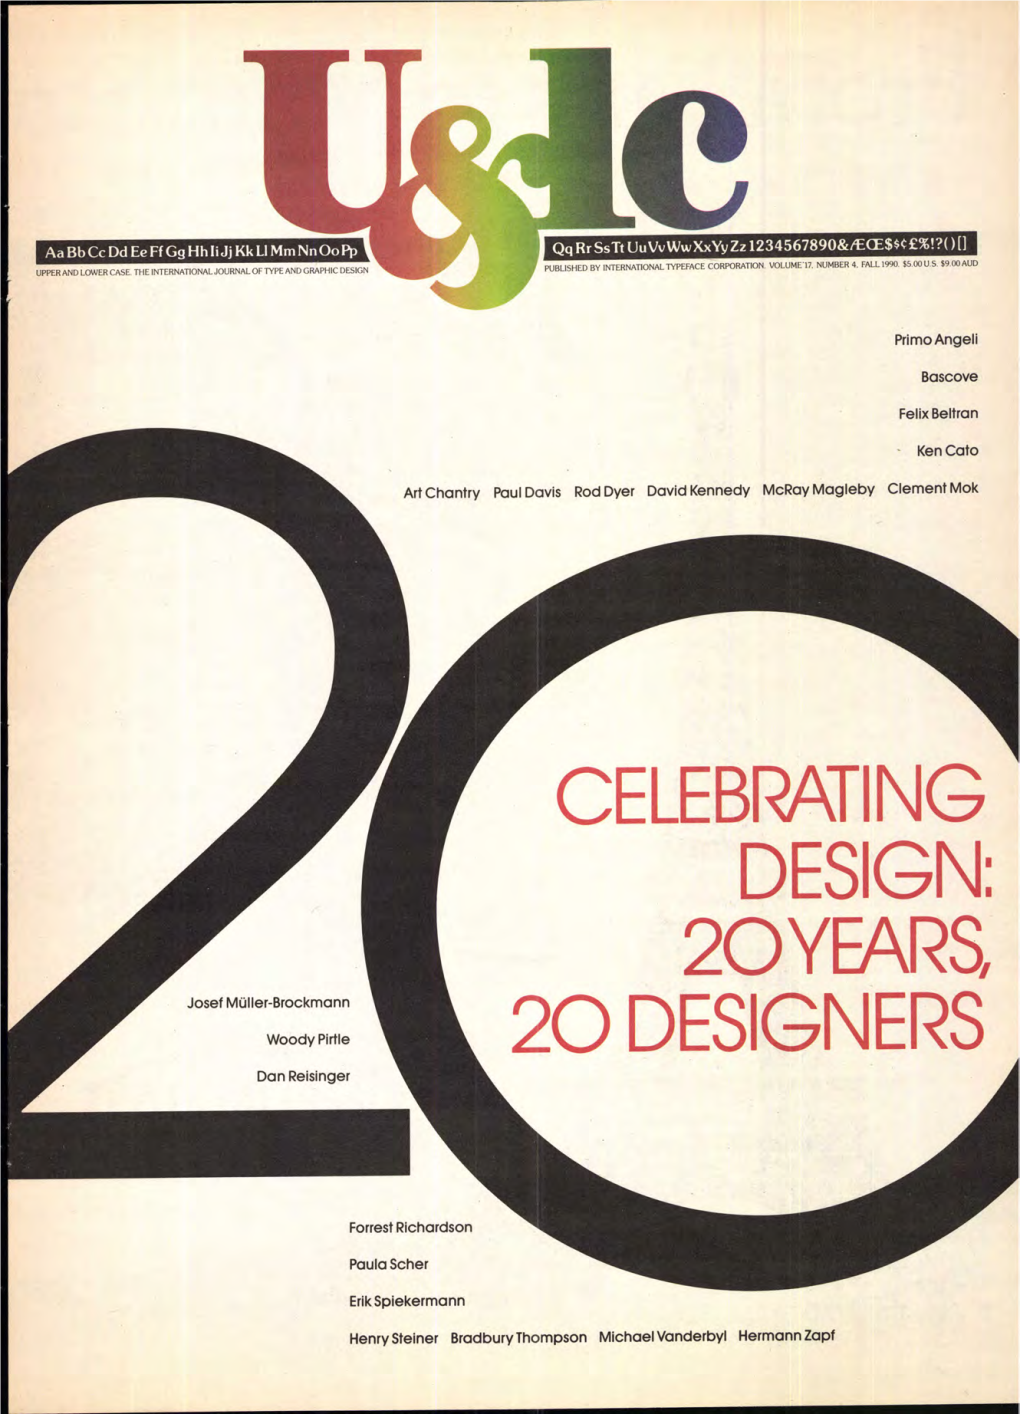 Celebrating Design: 20Years, 20 Designers